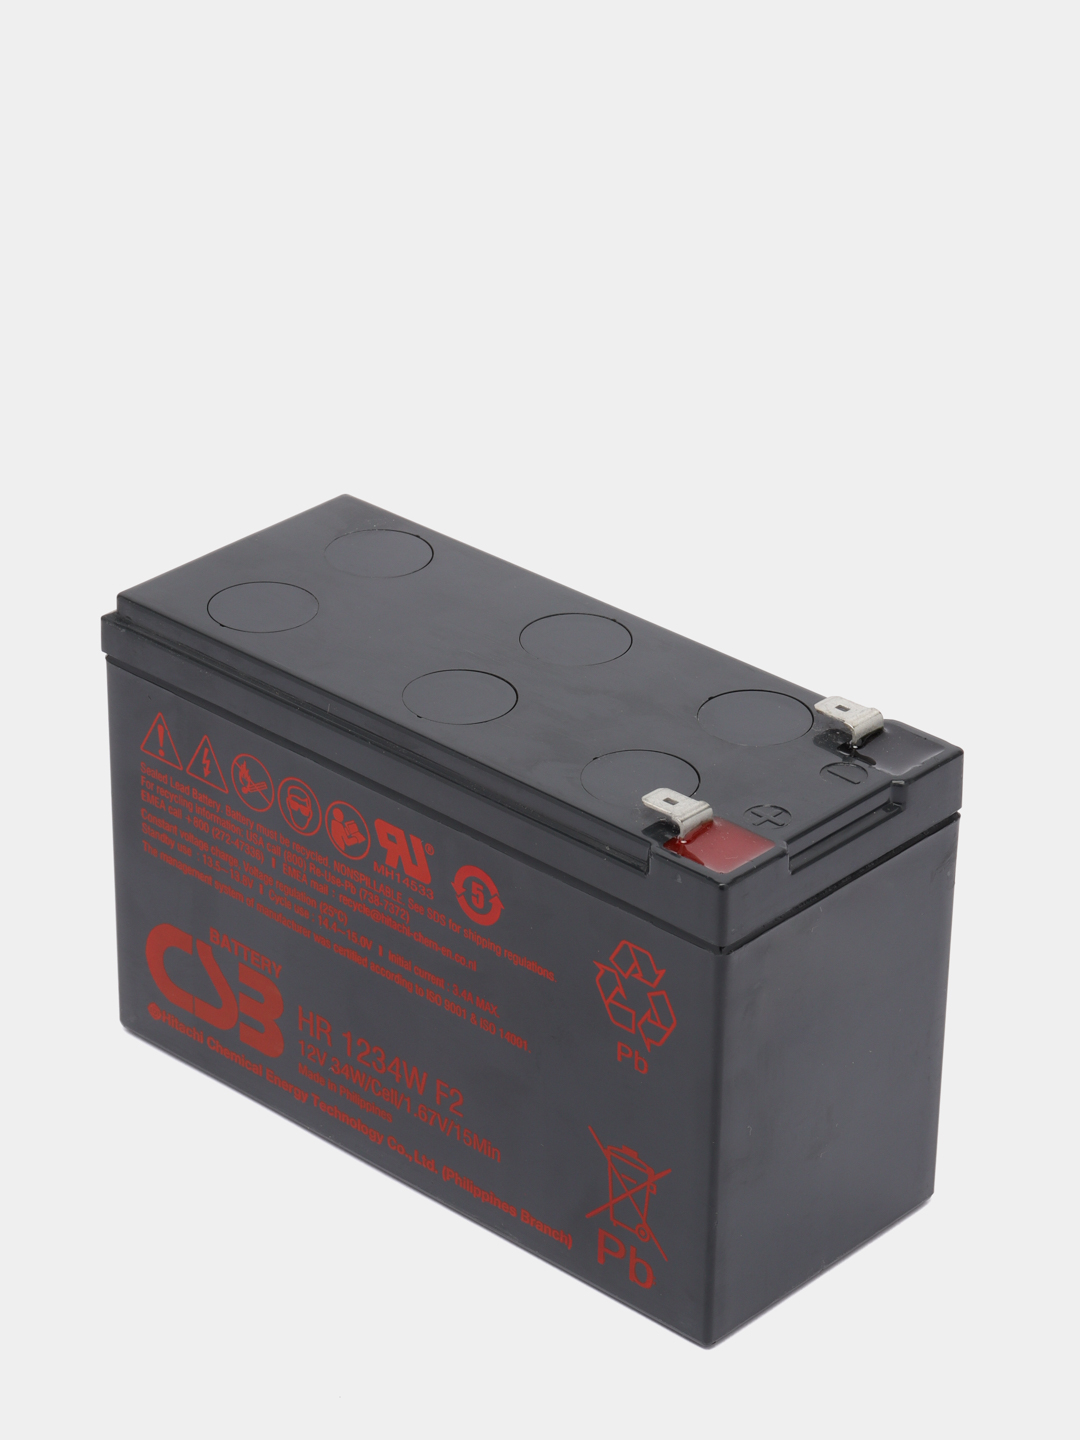 Аккумулятор CSB HR1234W 12В 9 Ач для ибп эхолота детского электромобиля .